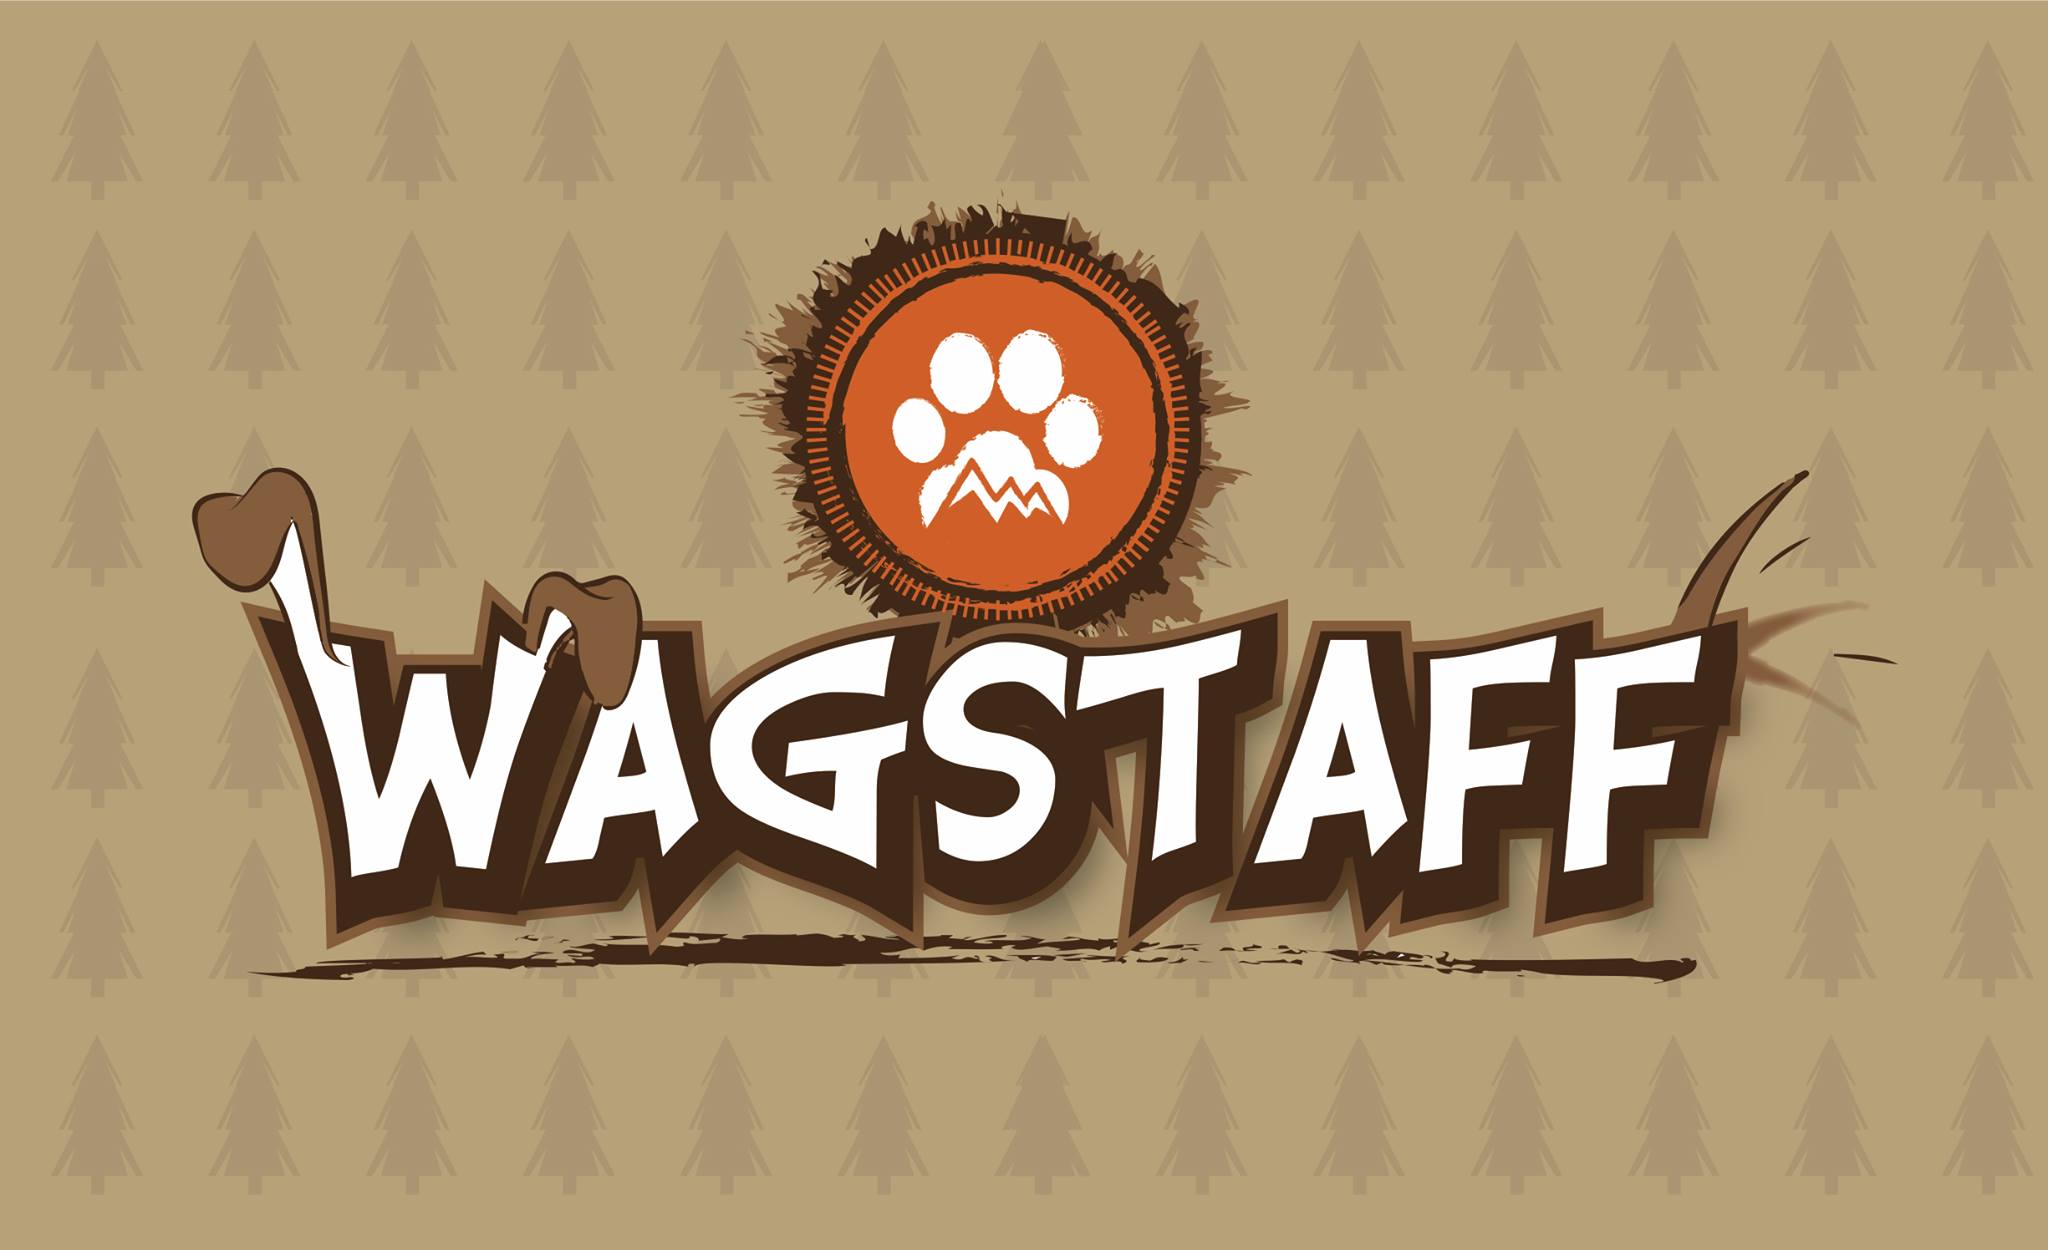 Wagstaff - https://www.facebook.com/pg/Wagstaff.flg